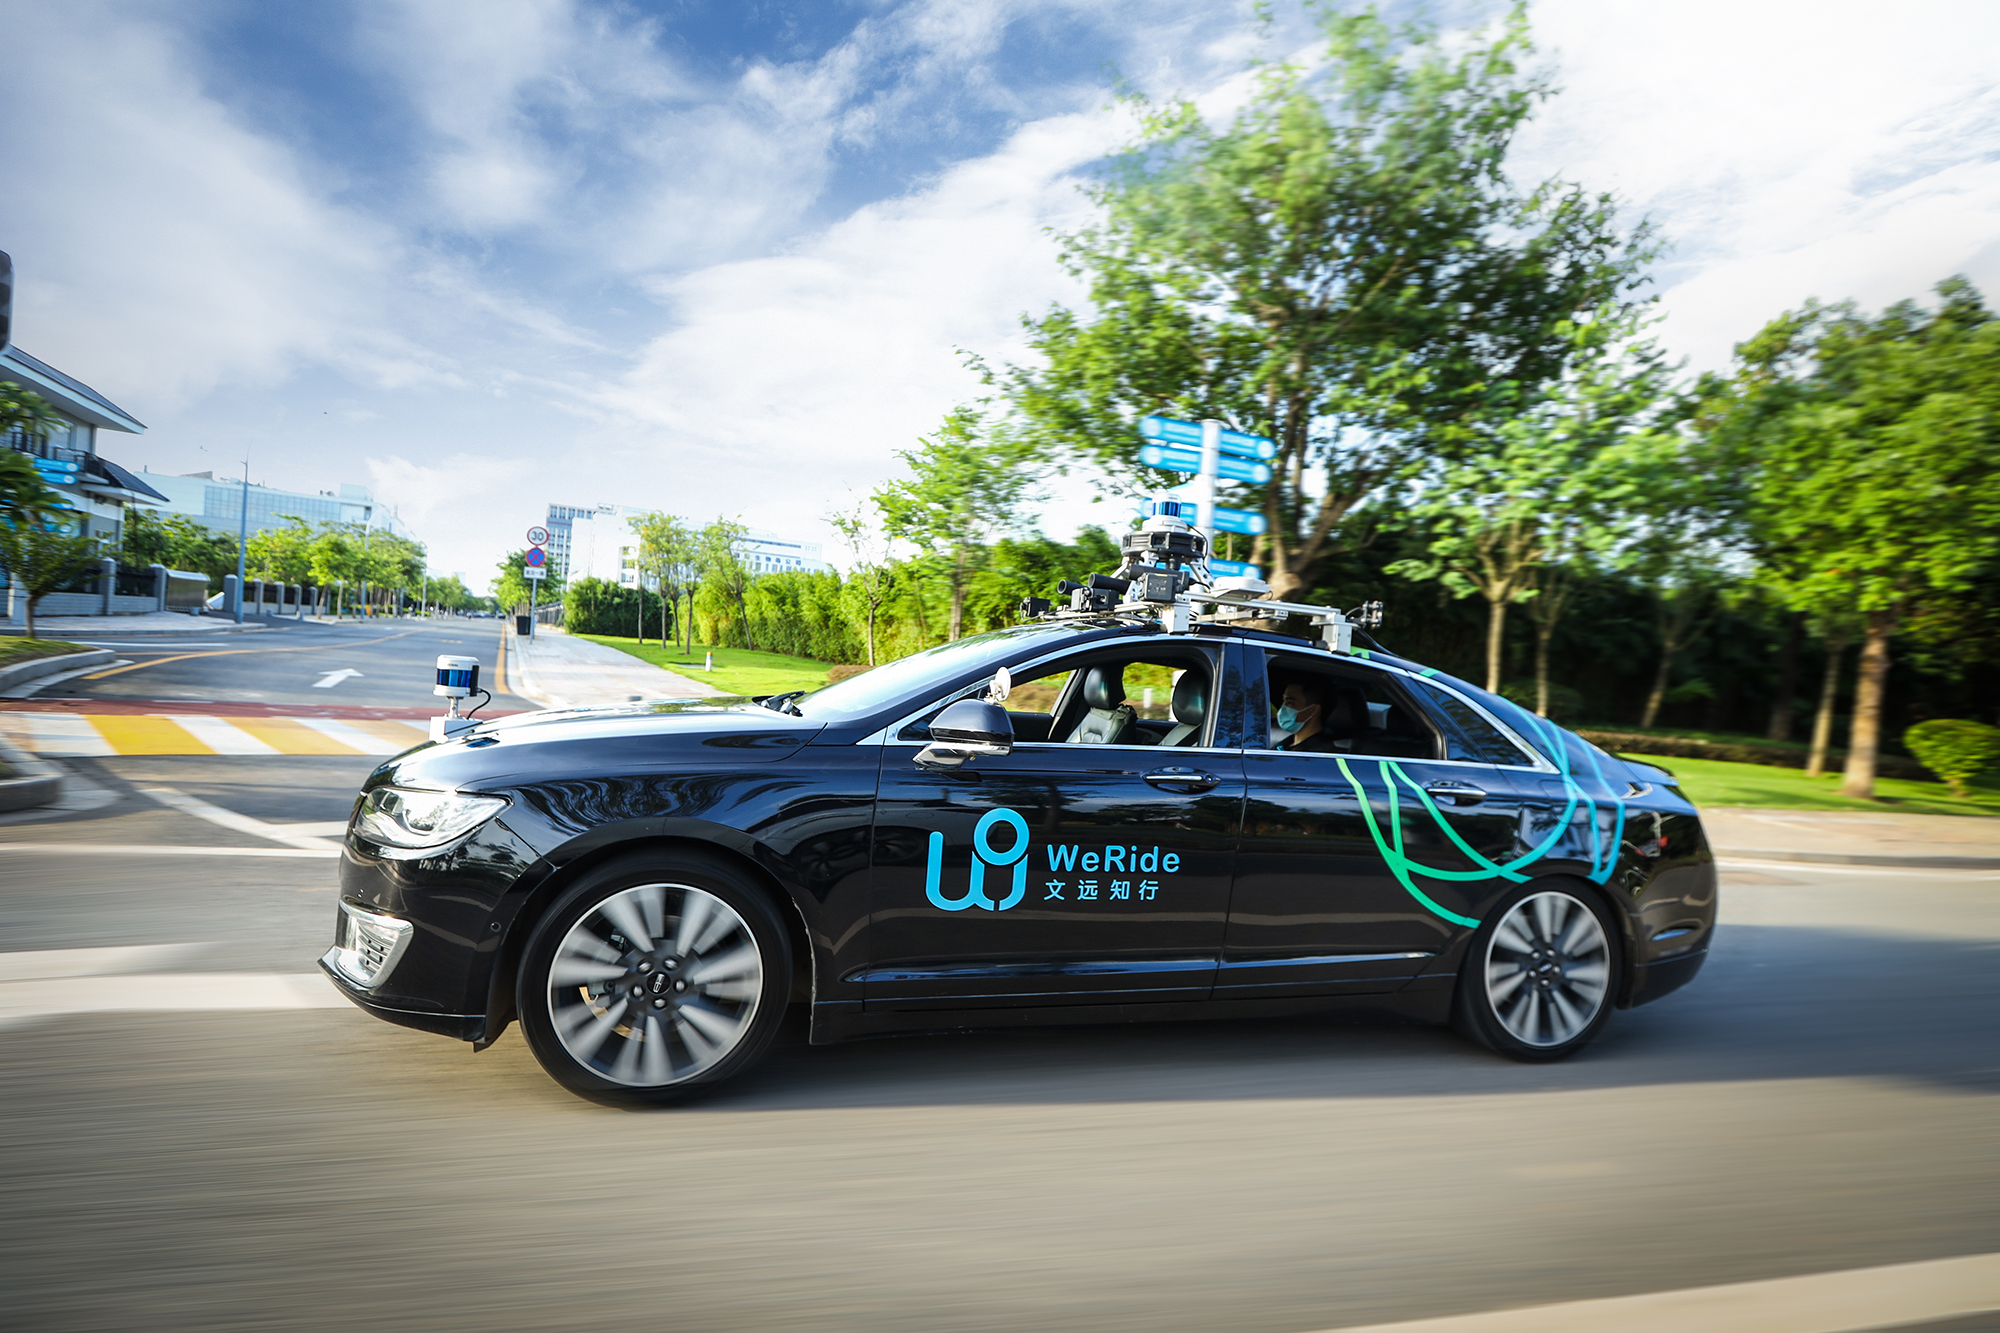 WeRide starts testing driverless autonomous vehicles in Guangzhou